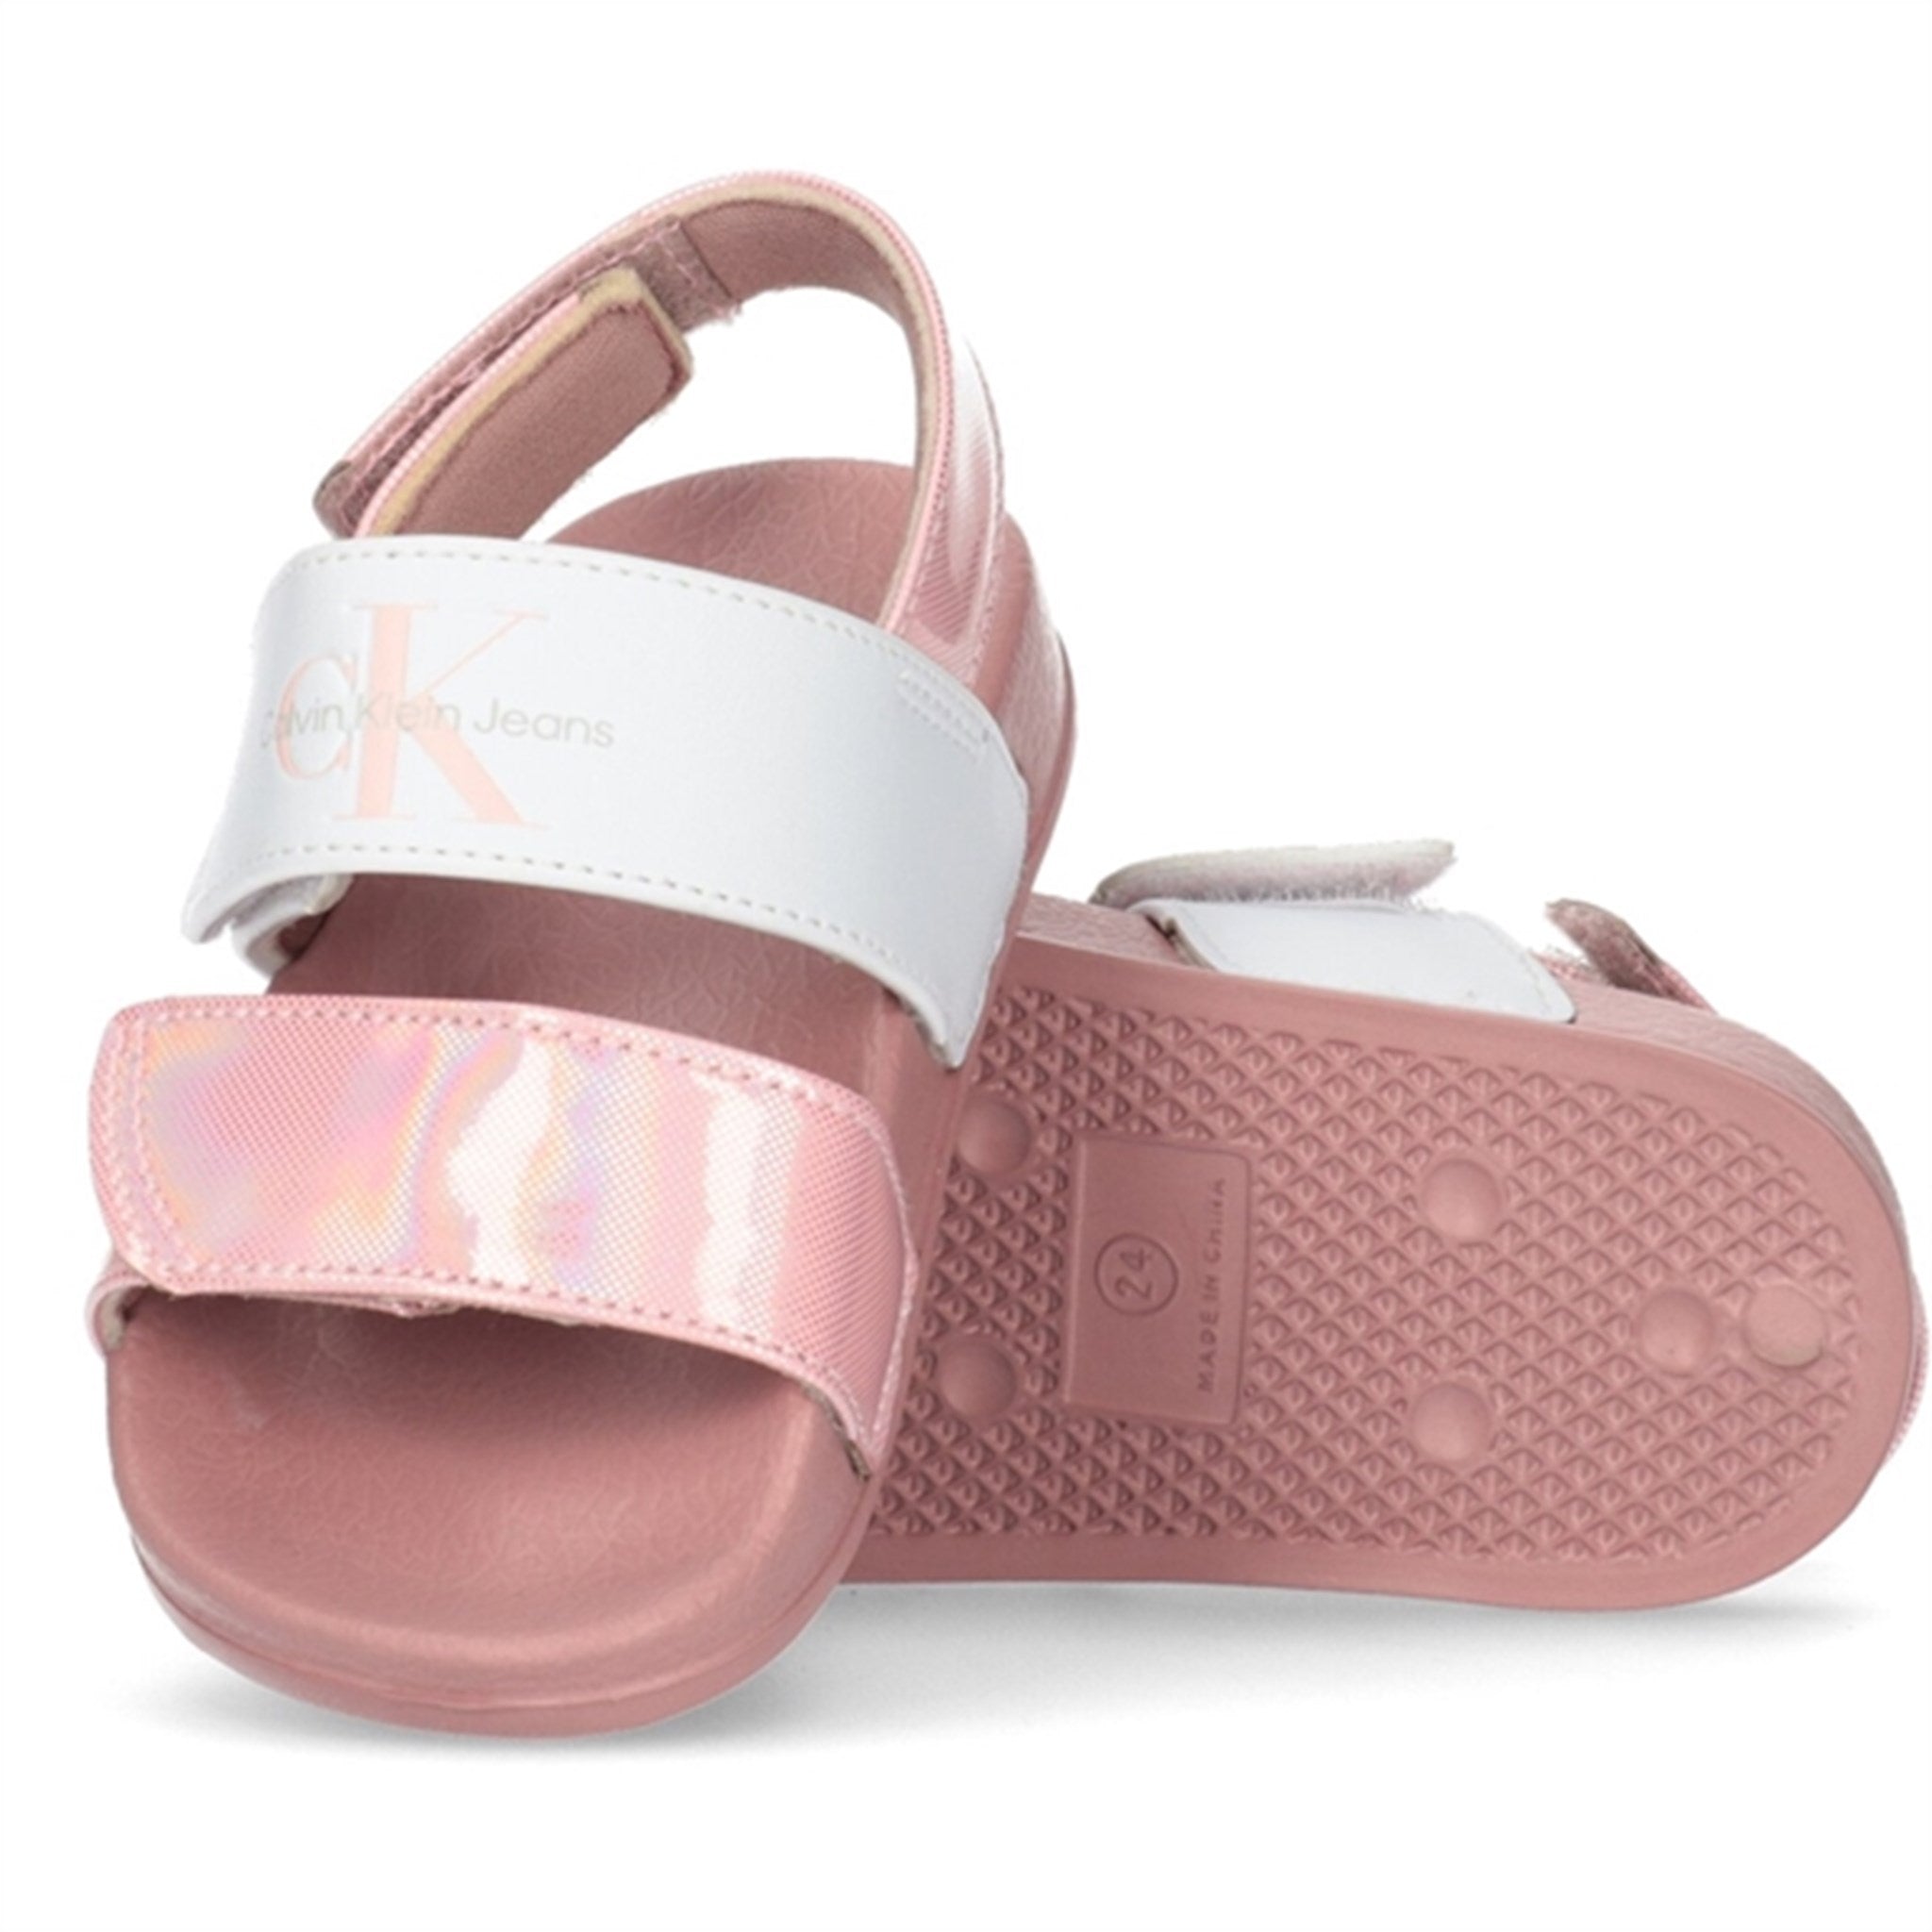 Calvin Klein Velcro Sandal Pink/White